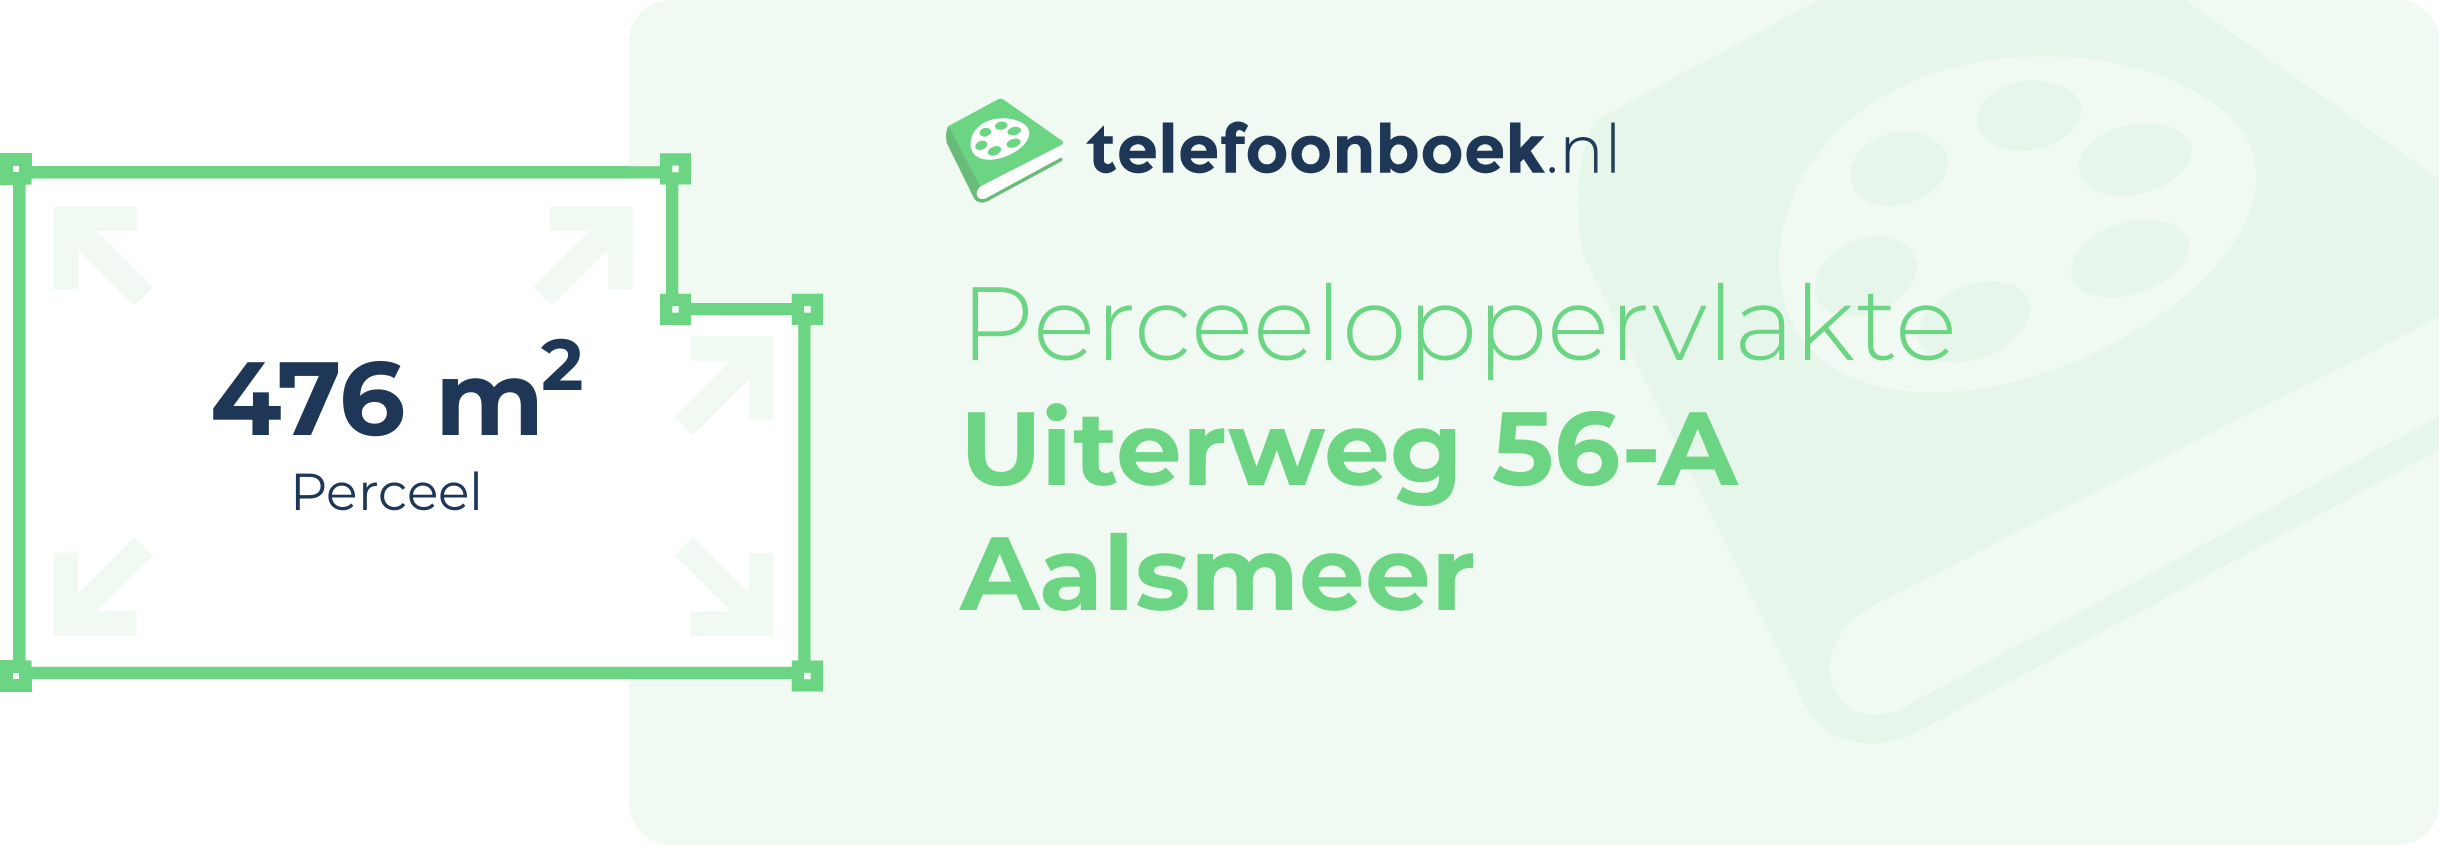 Perceeloppervlakte Uiterweg 56-A Aalsmeer